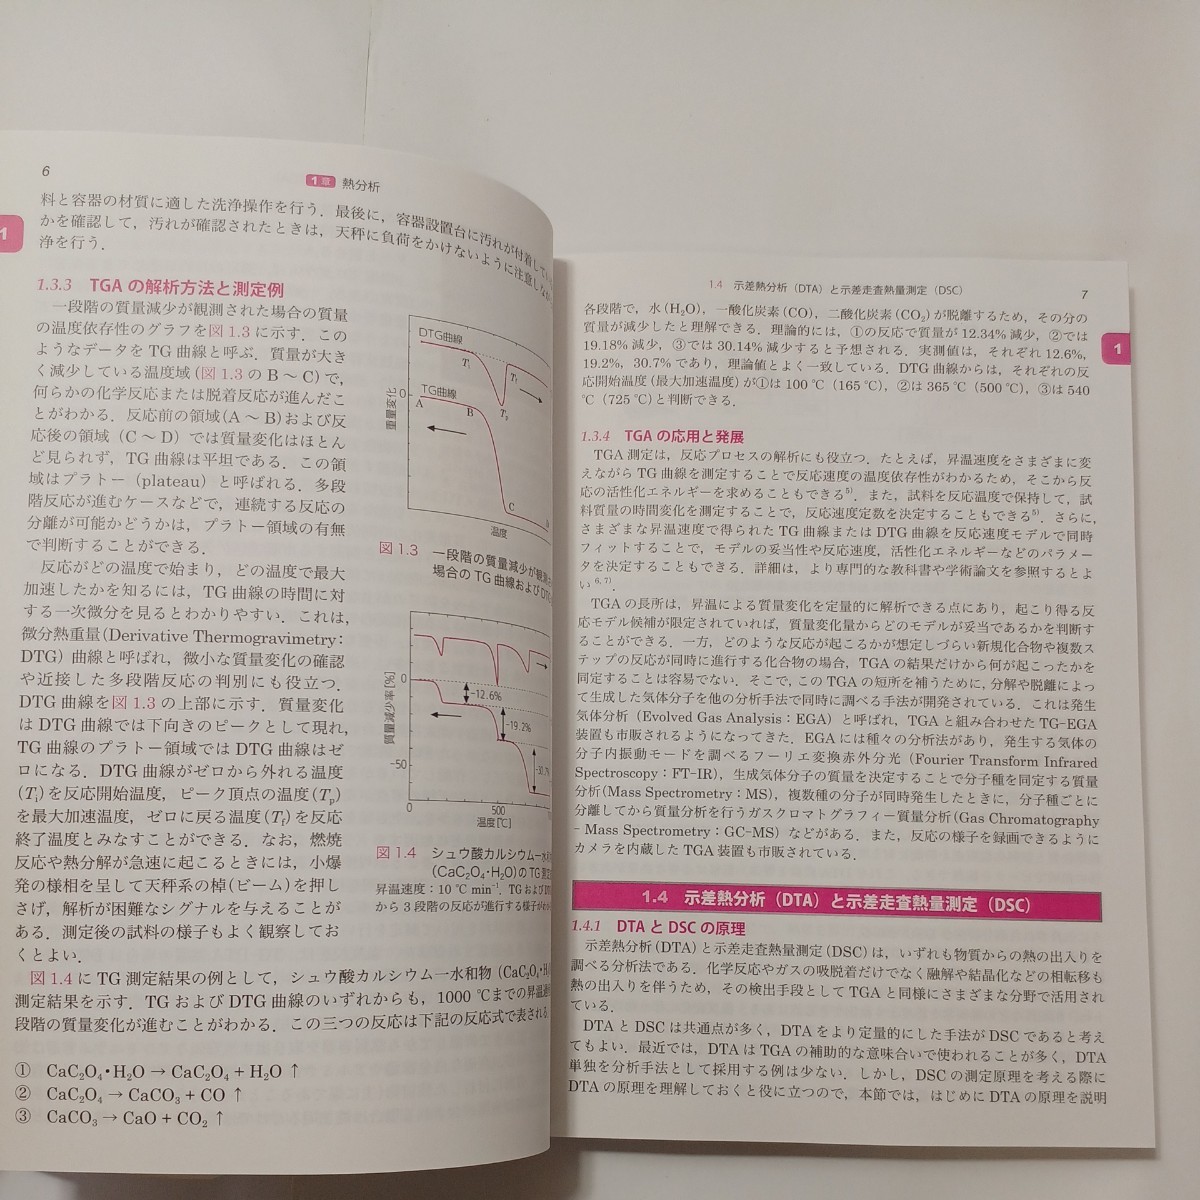 zaa-507! оборудование анализ рука книжка (3). body * поверхность анализ сборник ..../.. один / Fujiwara ./ юг превосходящий Akira [ сборник ] химия такой же человек (2021/03 продажа )